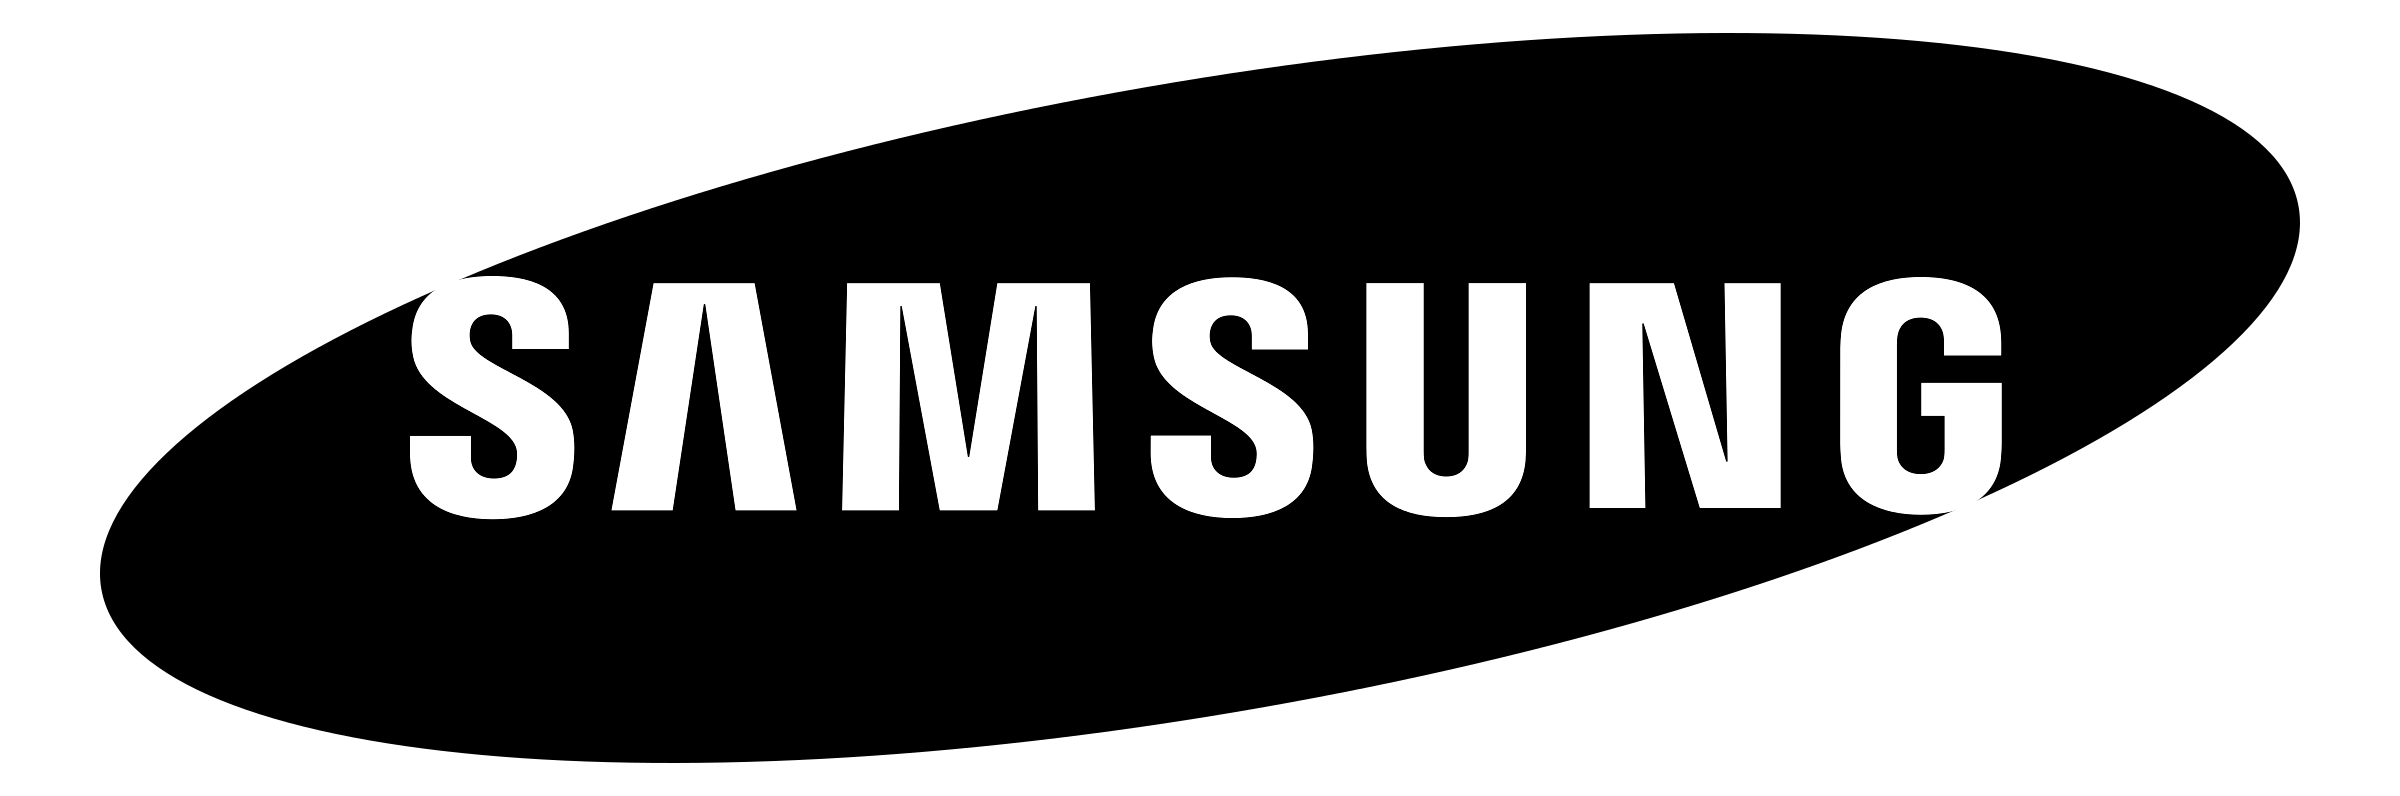 Samsung Logo - samsung-logo-black-transparent - Better Placed